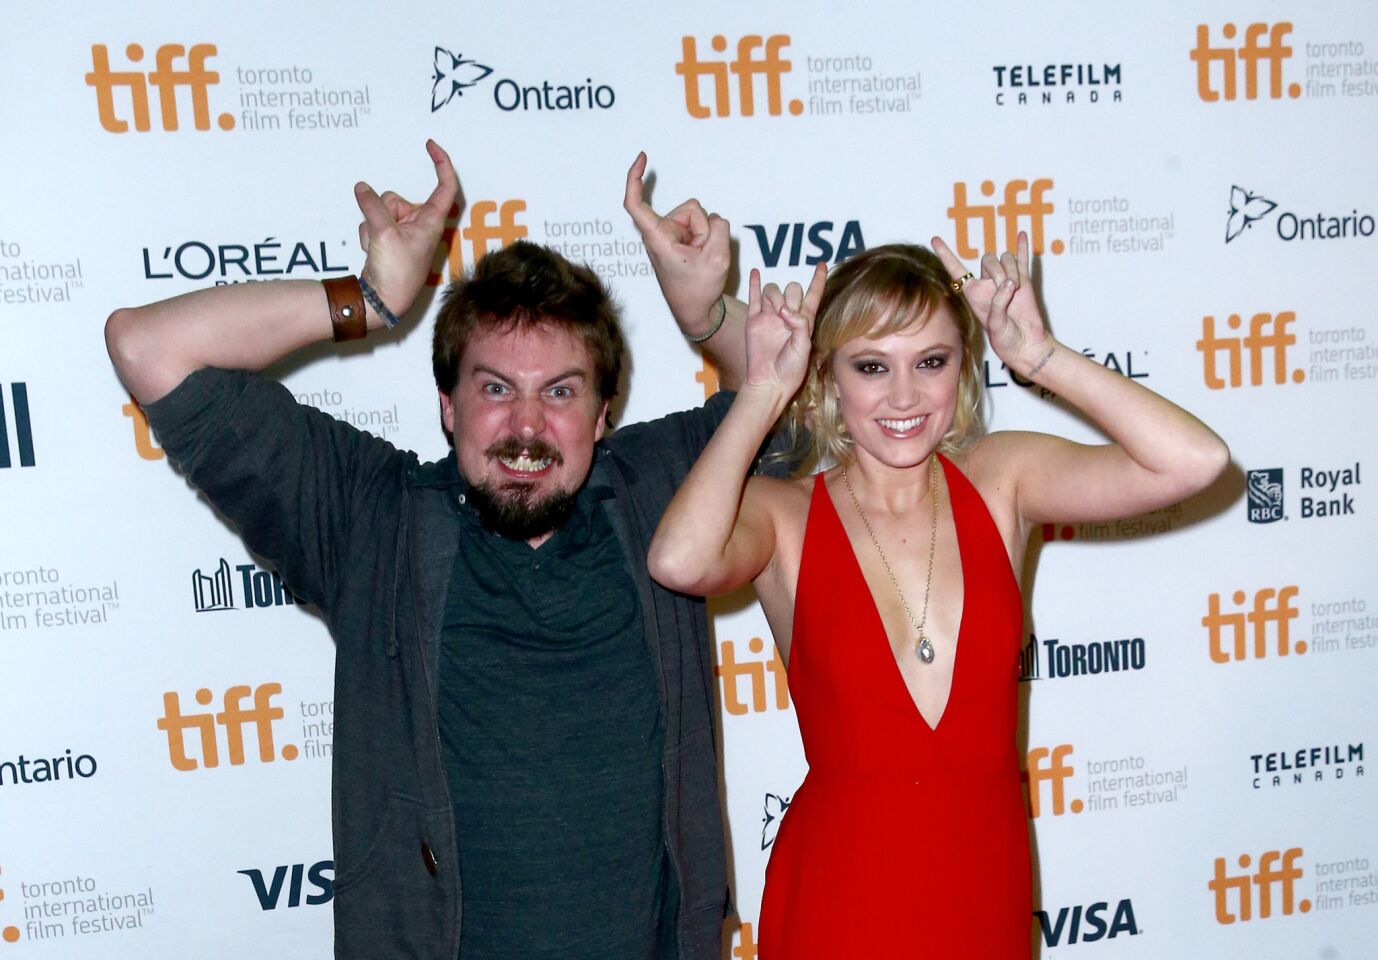 Toronto Film Festival 2014